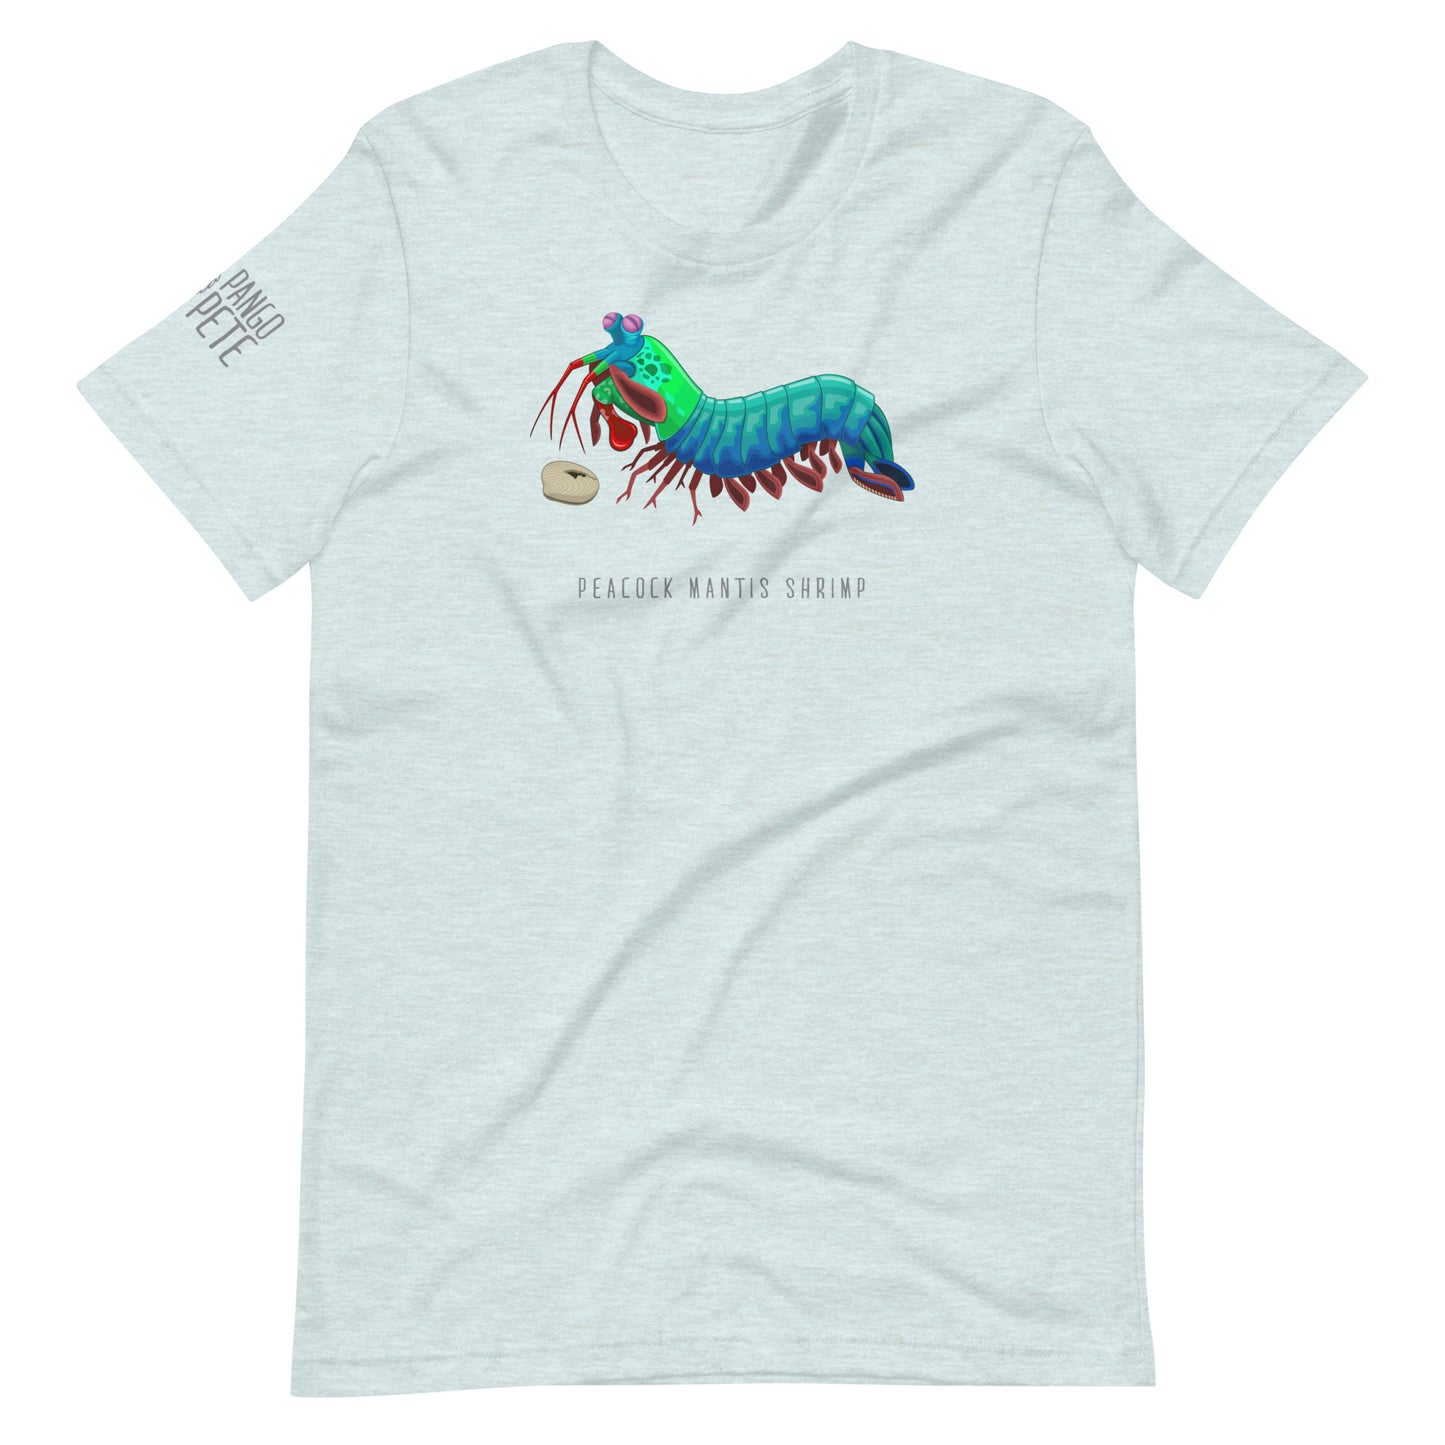 Peacock Mantis Shrimp T-shirt